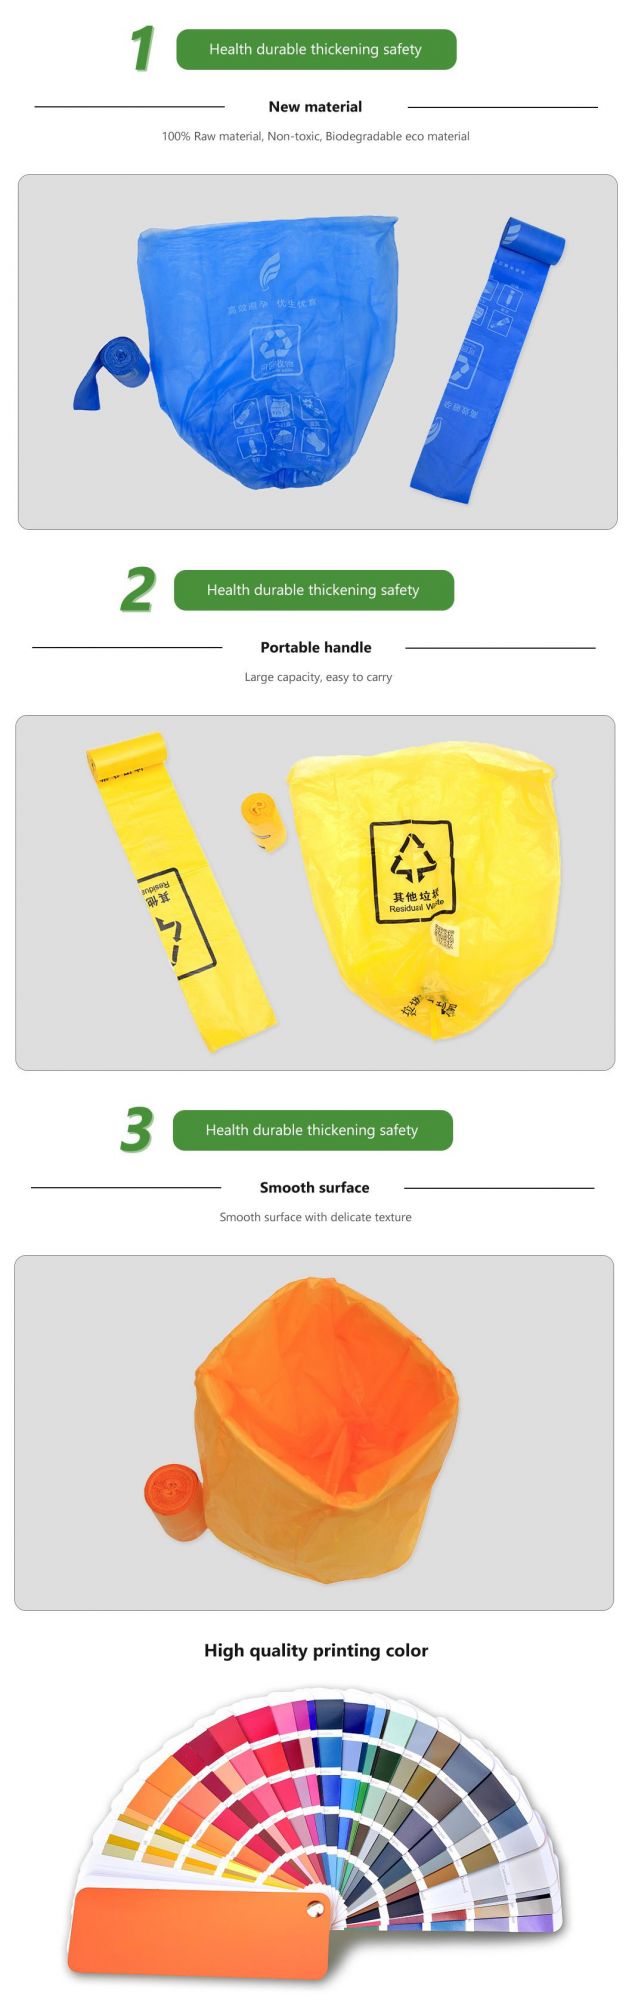 PLA+Pbat/Pbat+Corn Starch Biodegradable Bags, Compostable Bags, Rubbish Bags for School